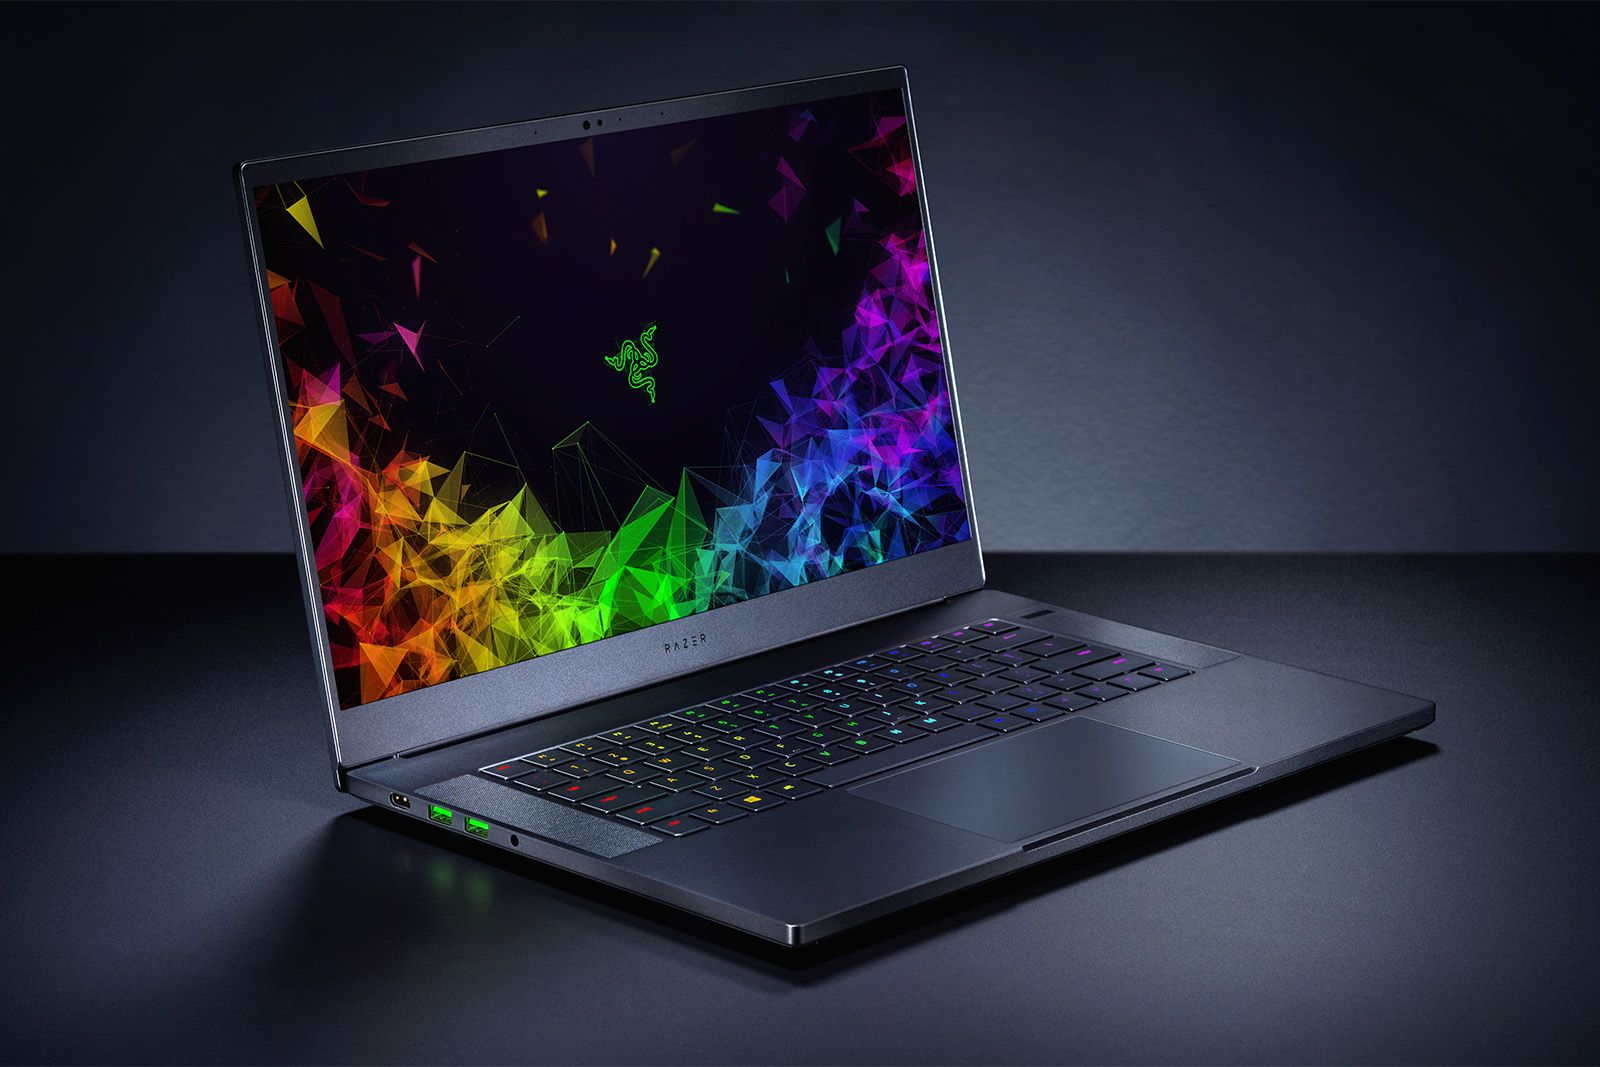 Razer Blade 15 gaming laptop gets GeForce RTX graphics for 2019 image 1